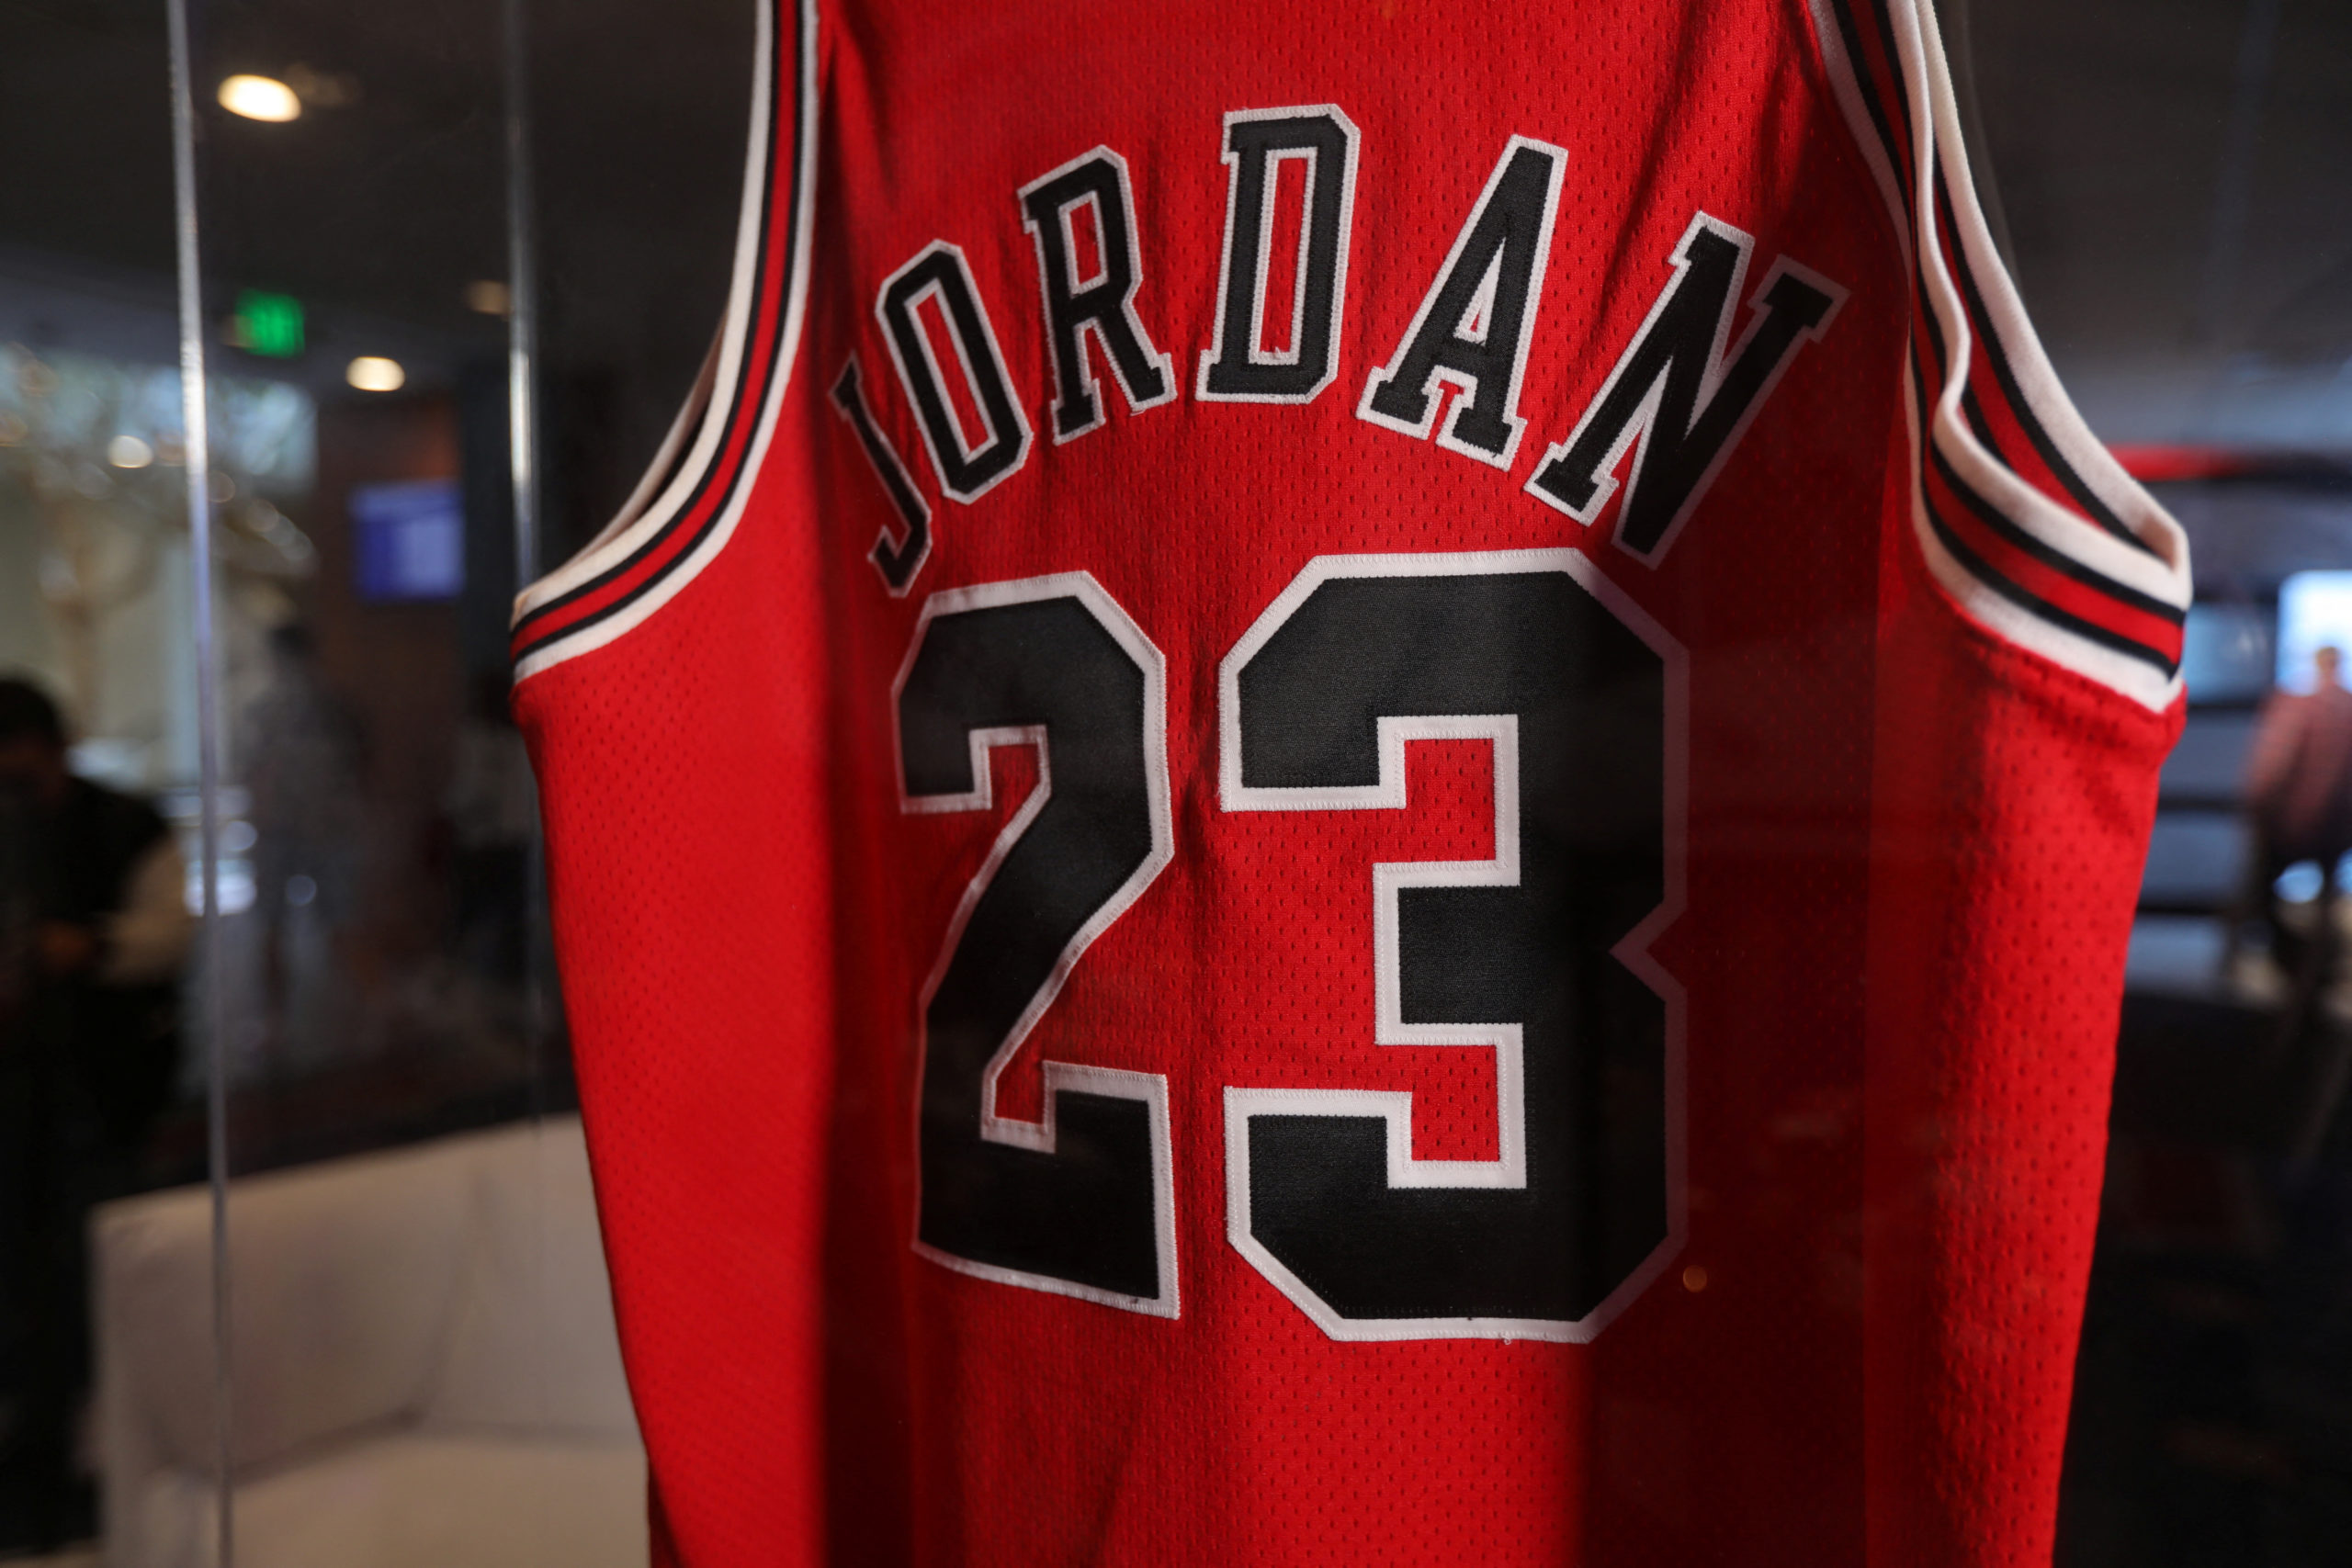 At $10.1 million, this Michael Jordan last dance jersey becomes